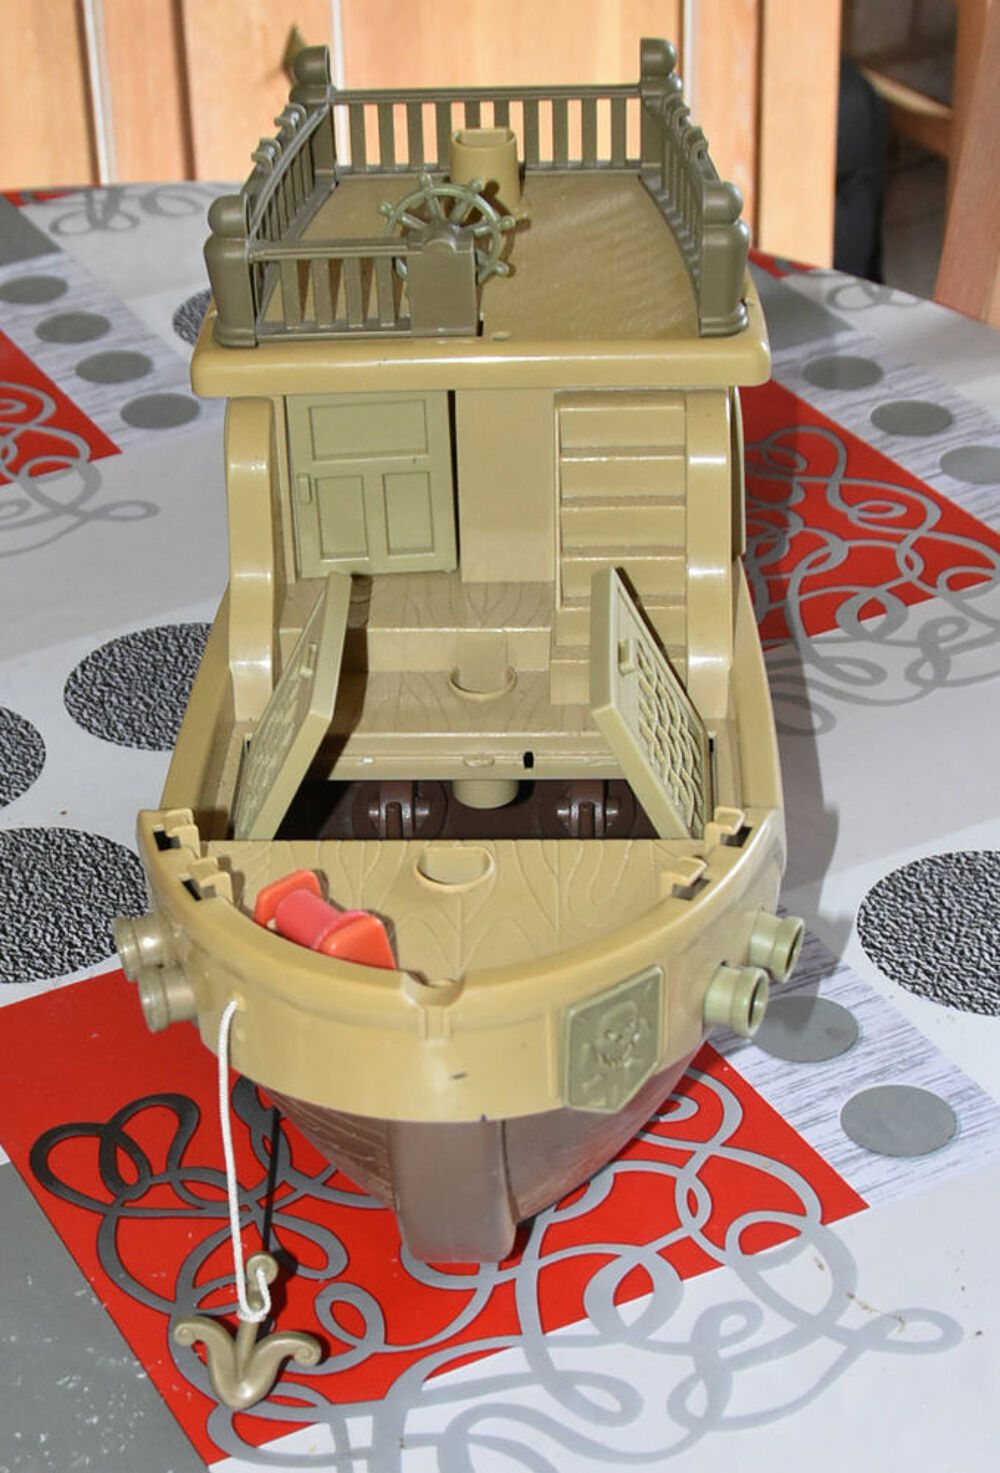 Bateau Playmobil (RedBox)
Jeux / jouets